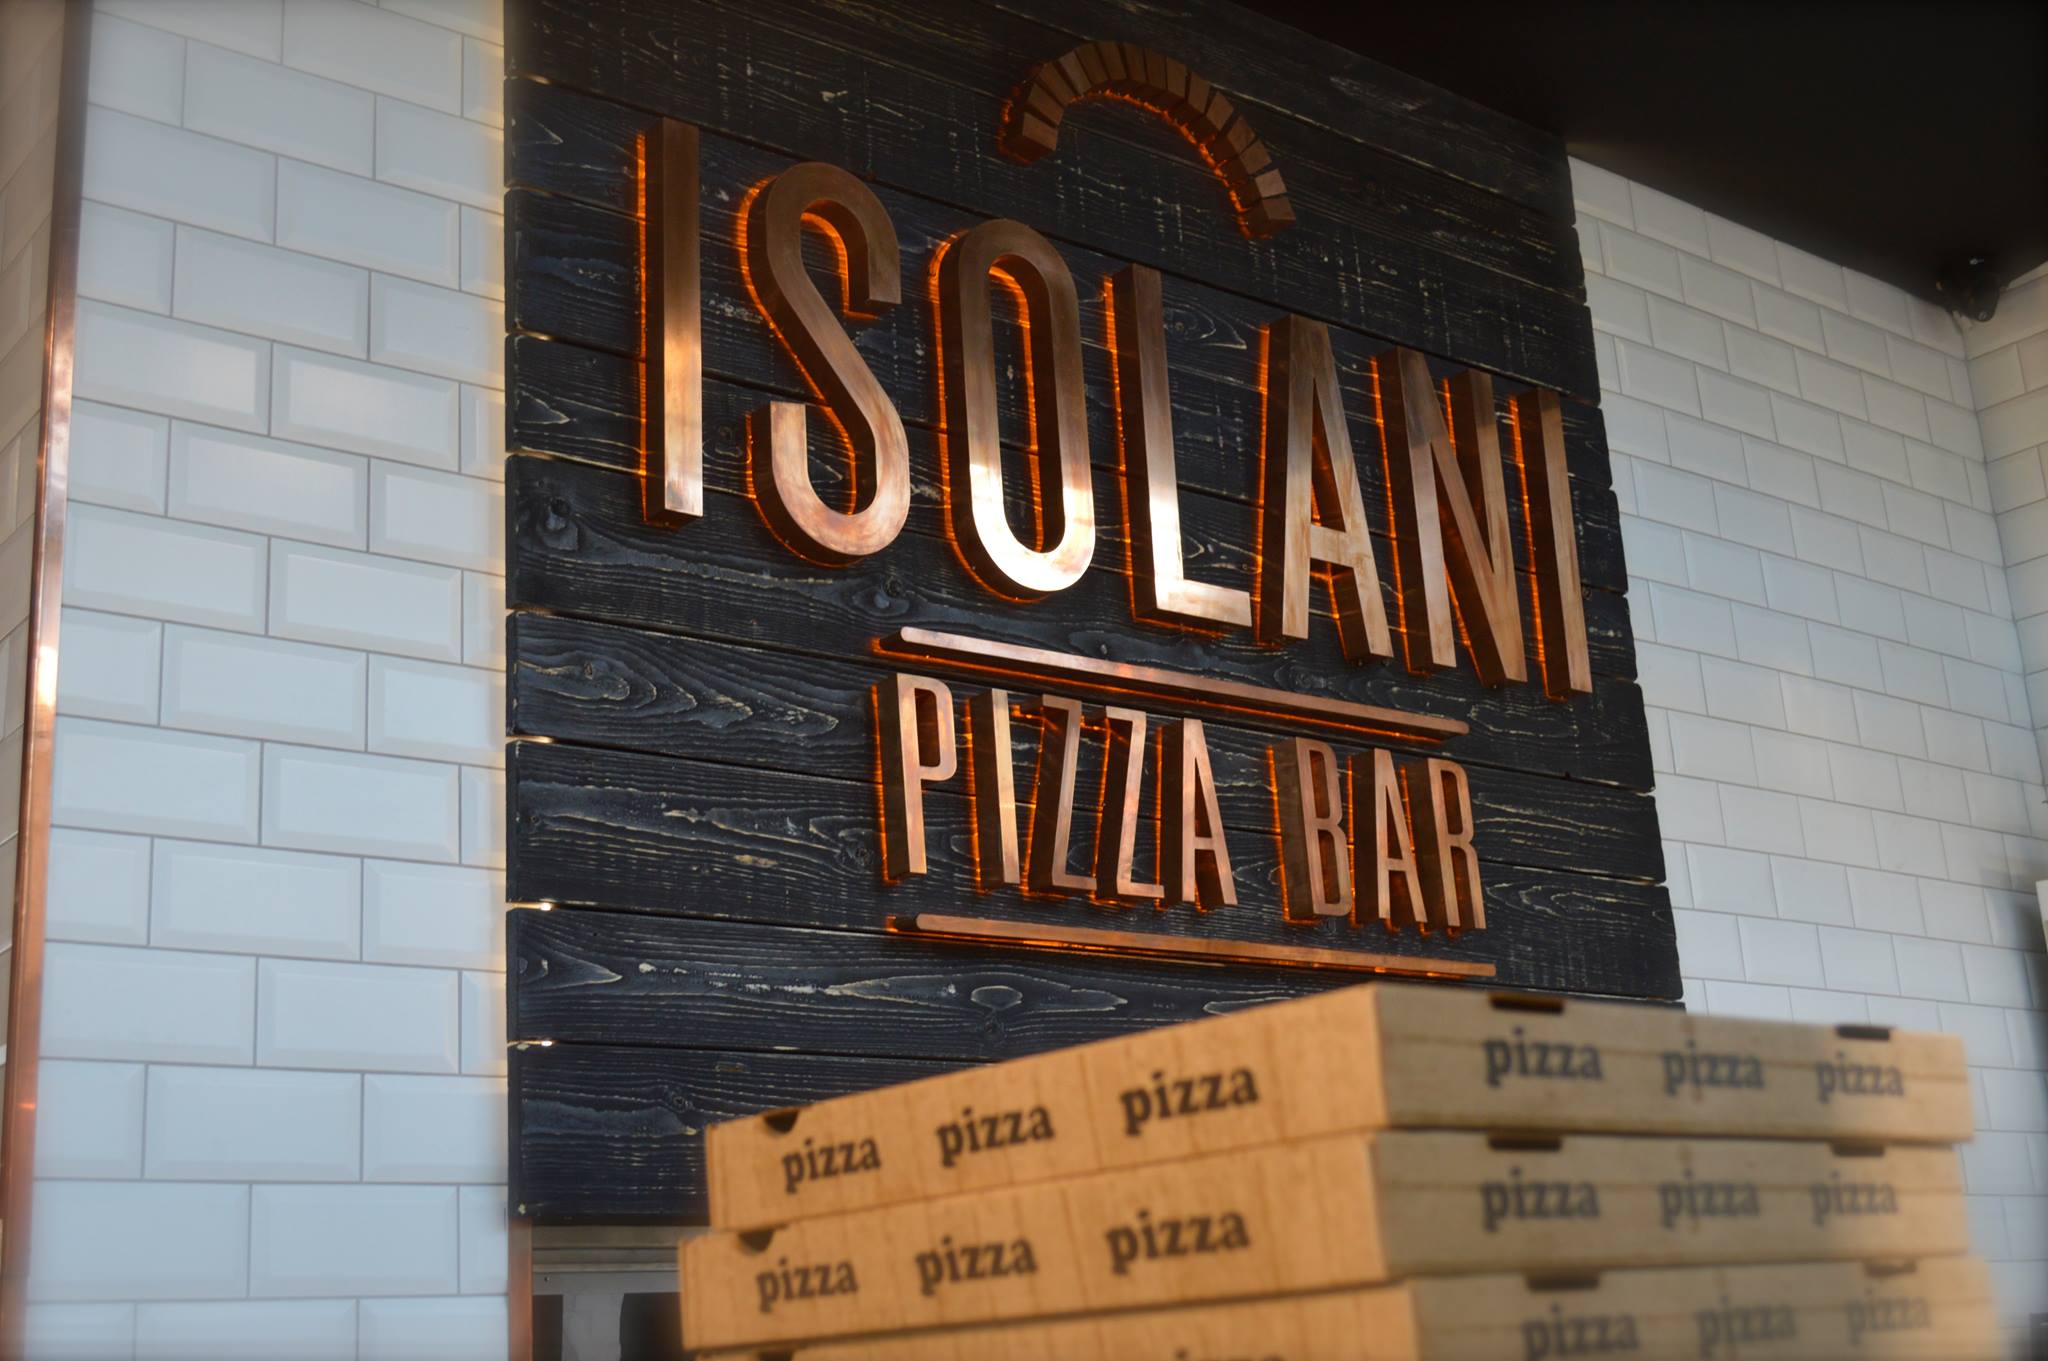 Isolani Pizza Bar - Nicosia